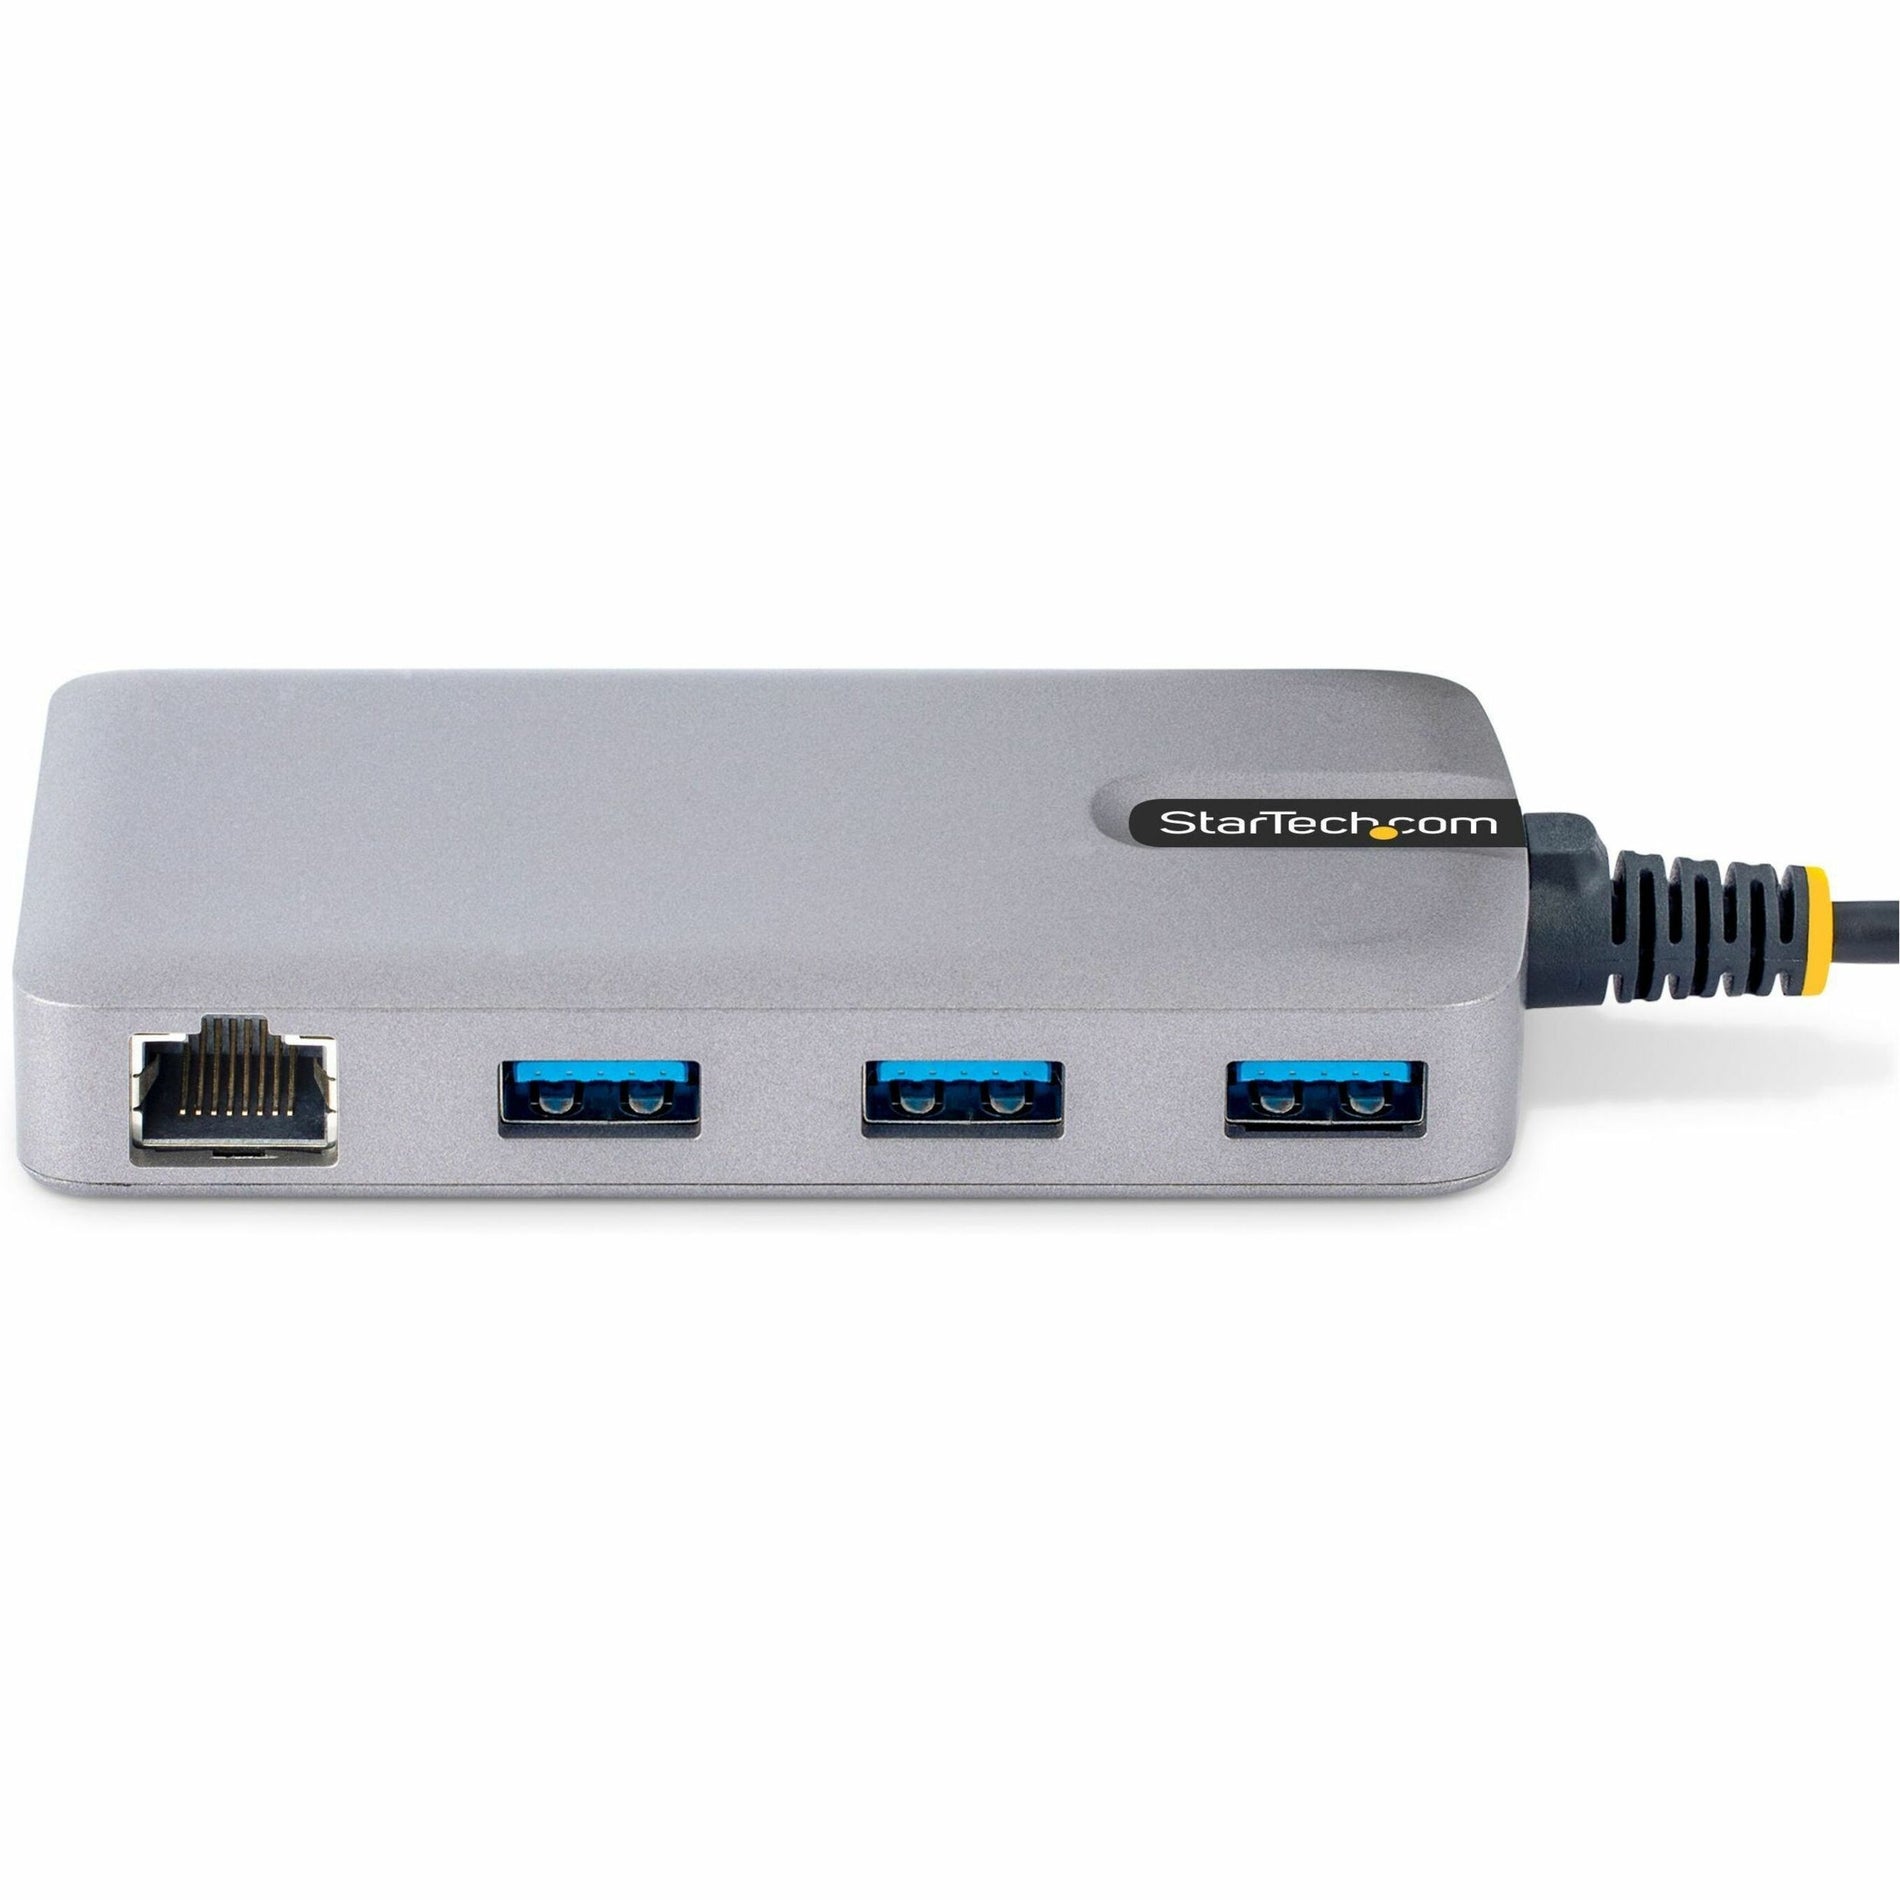 StarTech.com 5G3AGBB-USB-C-HUB USB/Ethernet Combo Hub, 3 USB Ports, Space Gray